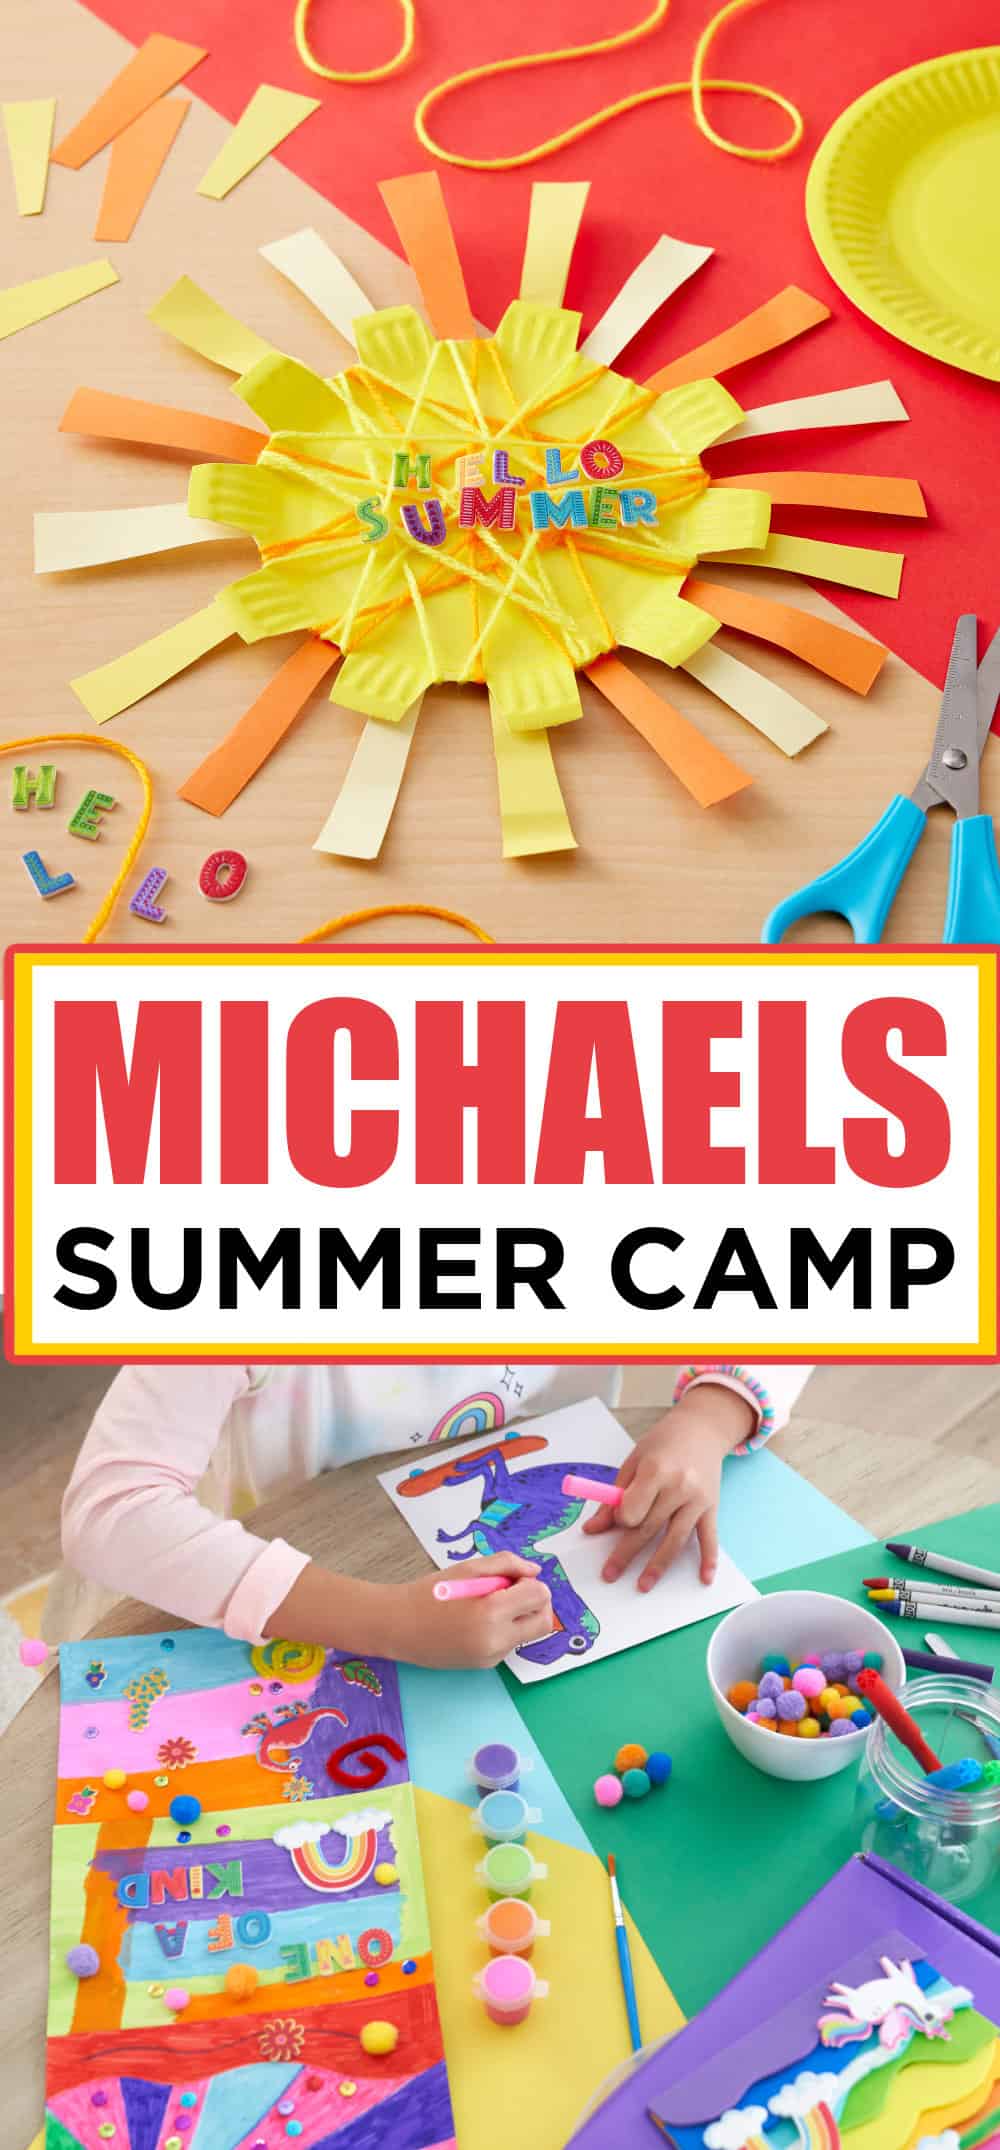 Michaels Summer Camp